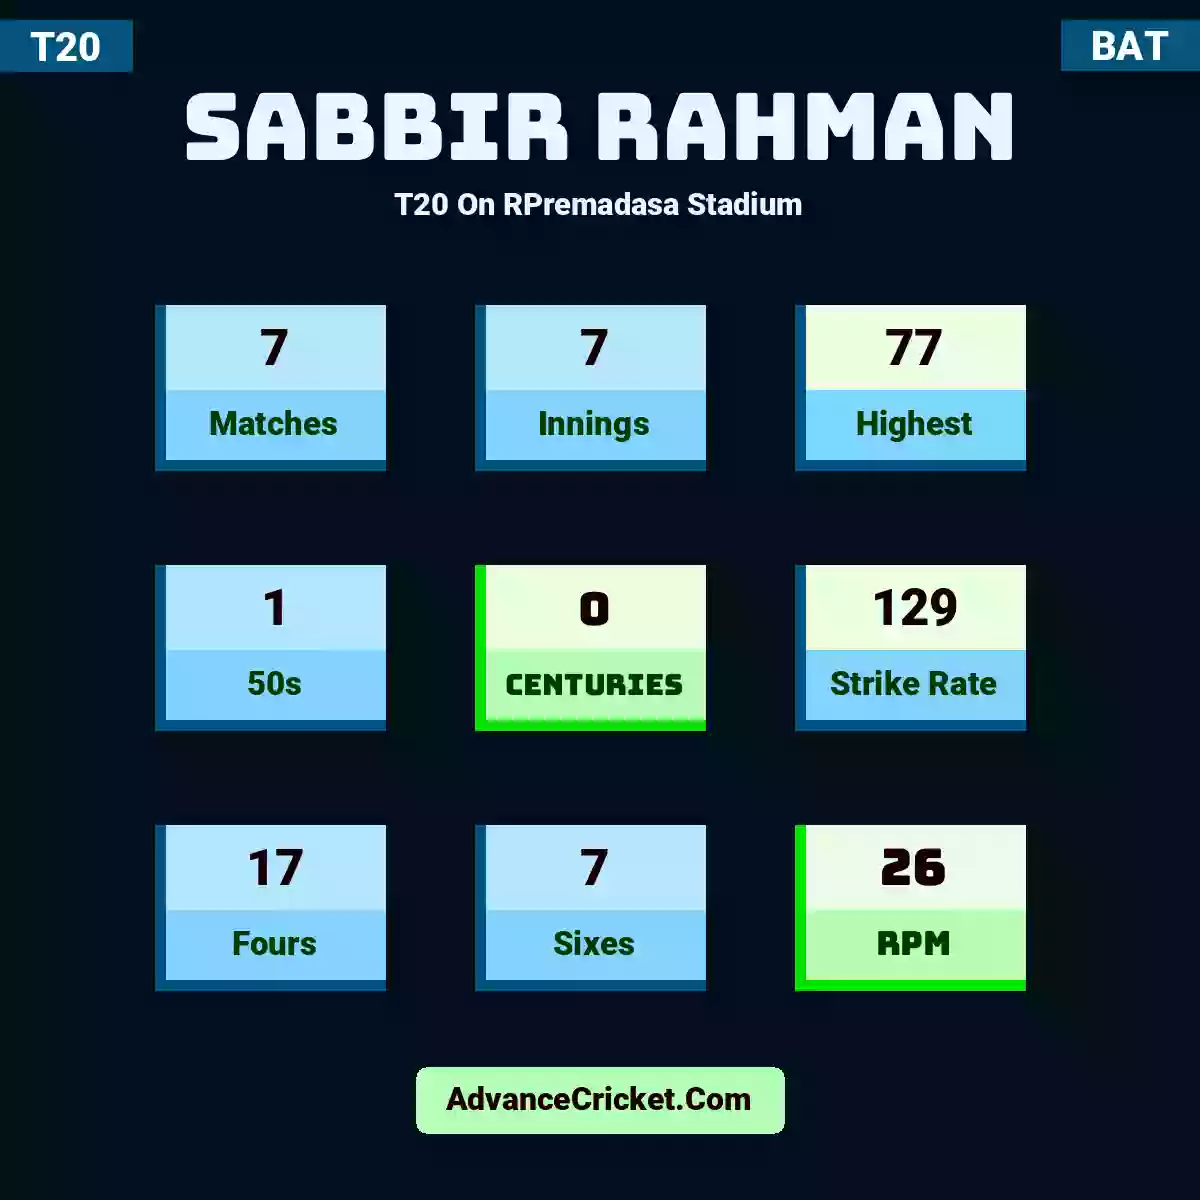 Sabbir Rahman T20  On RPremadasa Stadium, Sabbir Rahman played 7 matches, scored 77 runs as highest, 1 half-centuries, and 0 centuries, with a strike rate of 129. S.Rahman hit 17 fours and 7 sixes, with an RPM of 26.